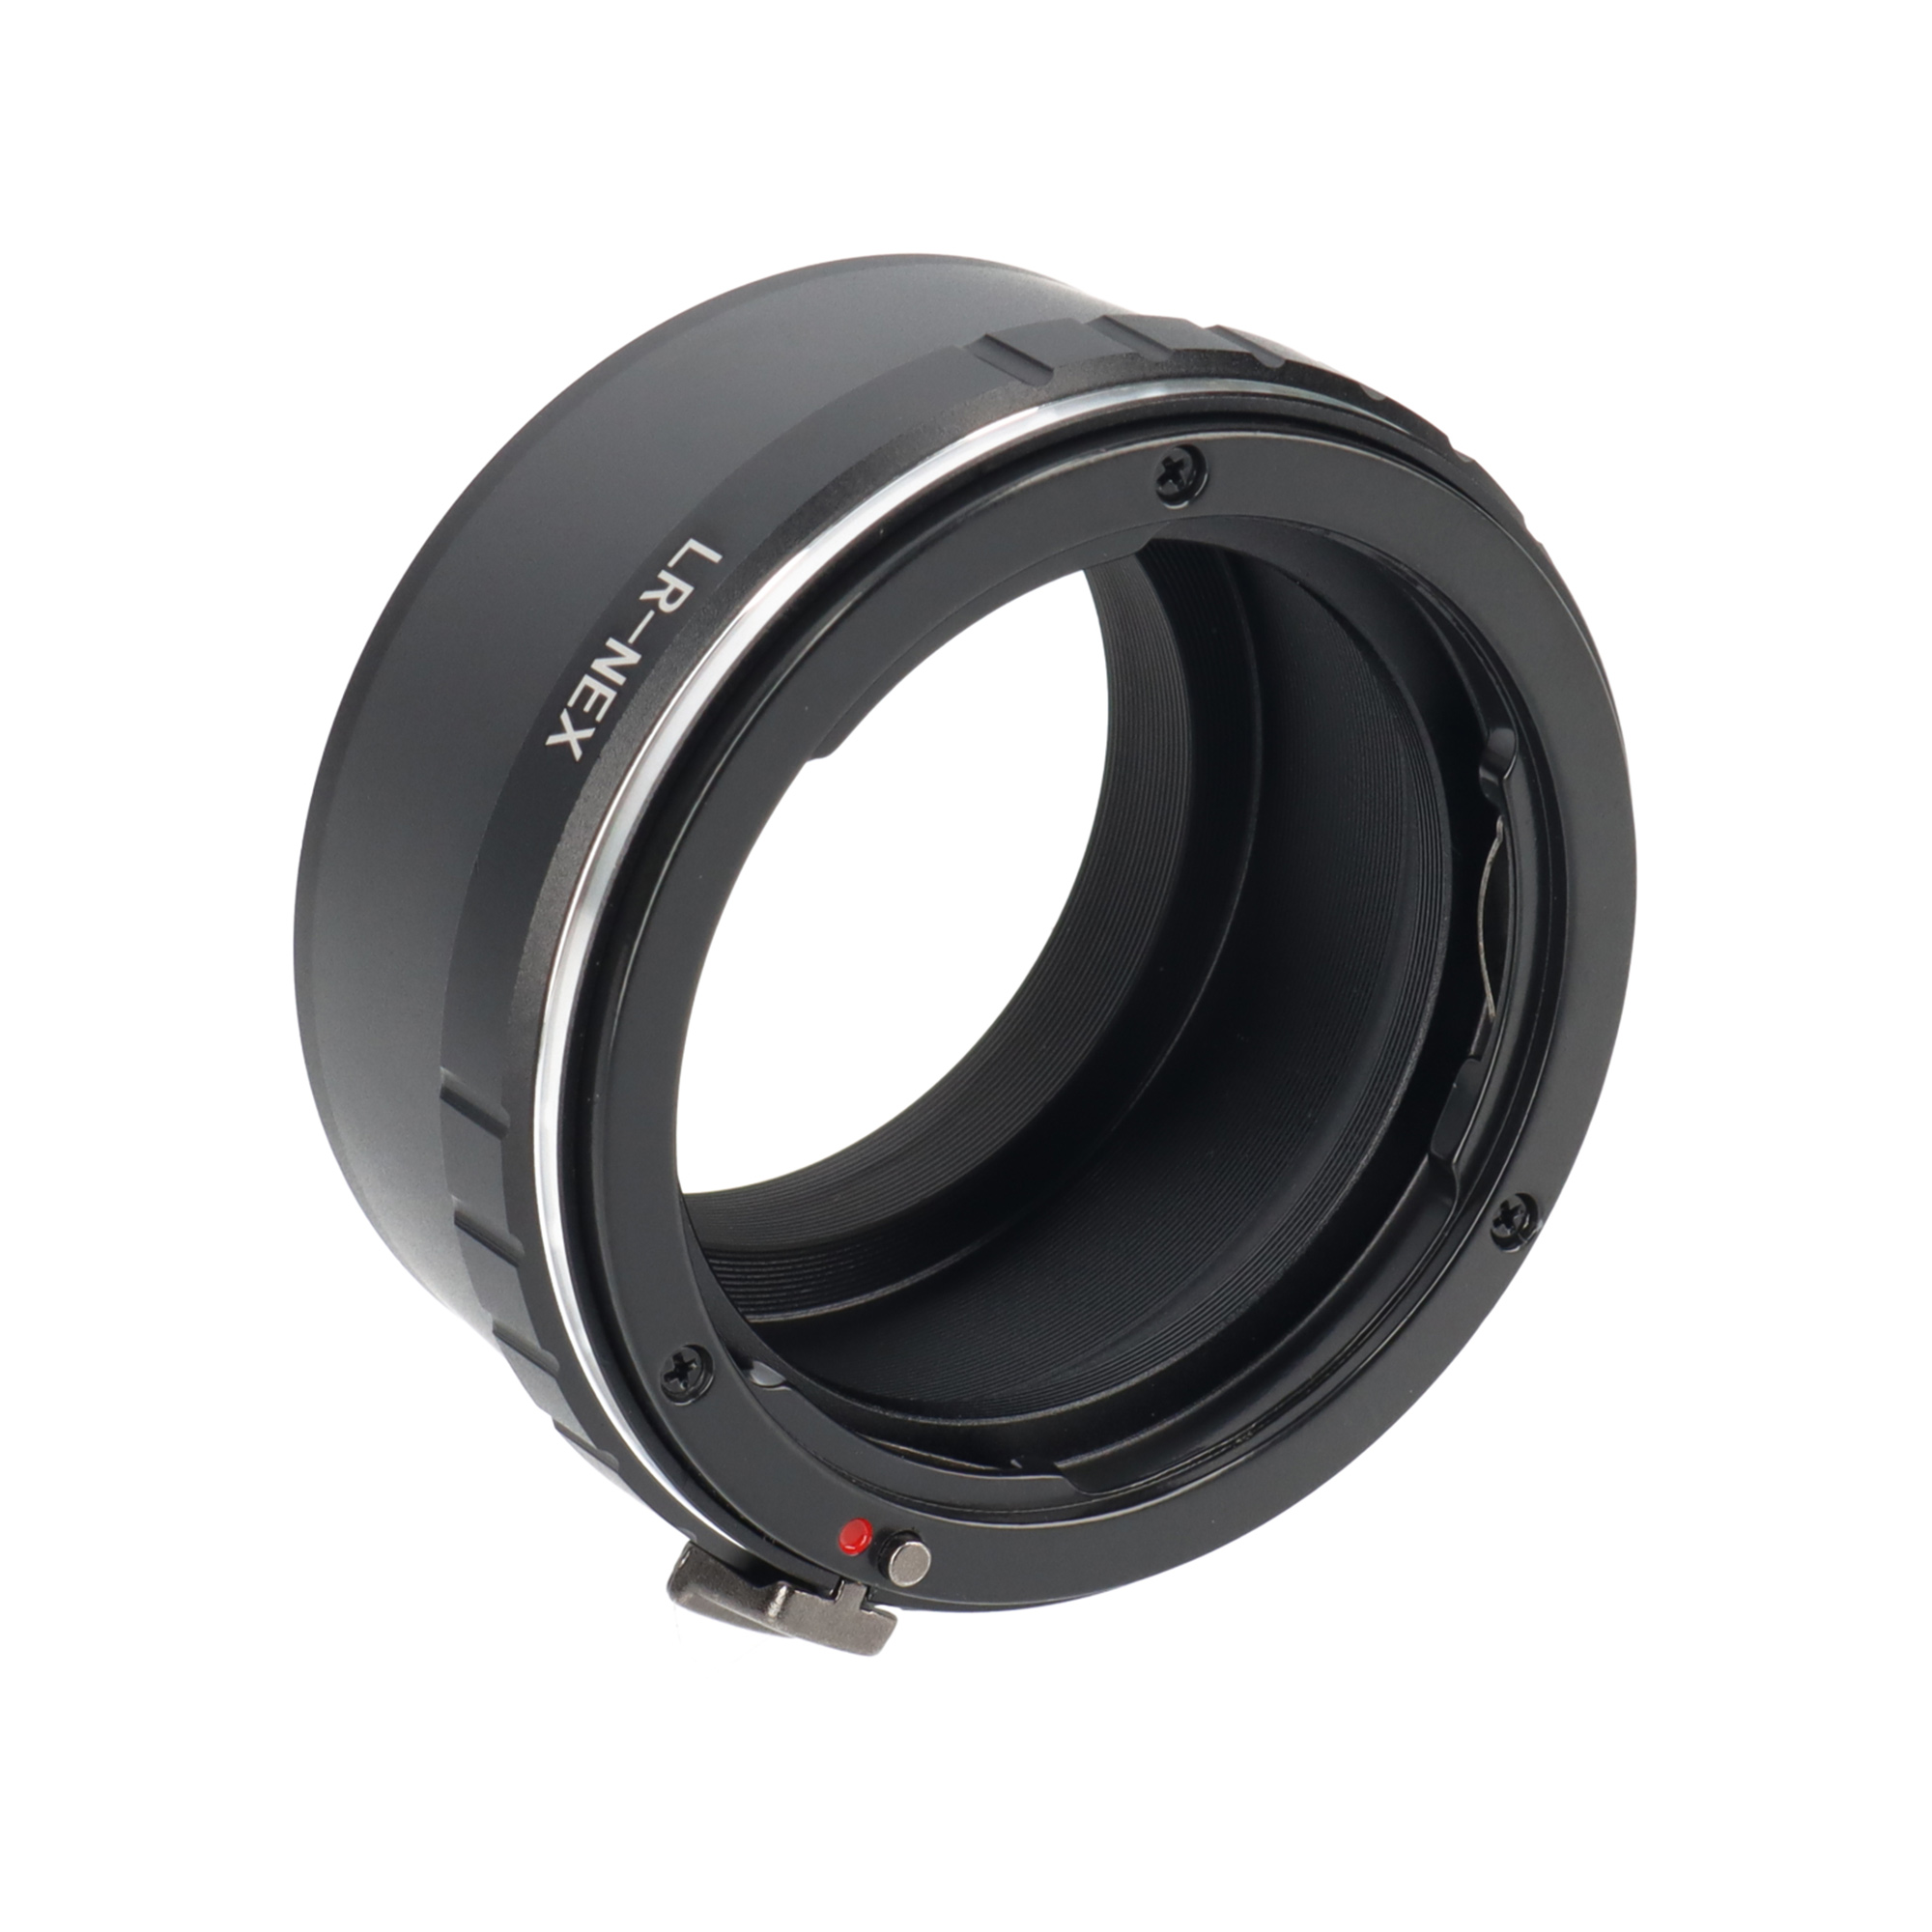 Adapter für Leica R Objektive an Sony E-Mount Kameras